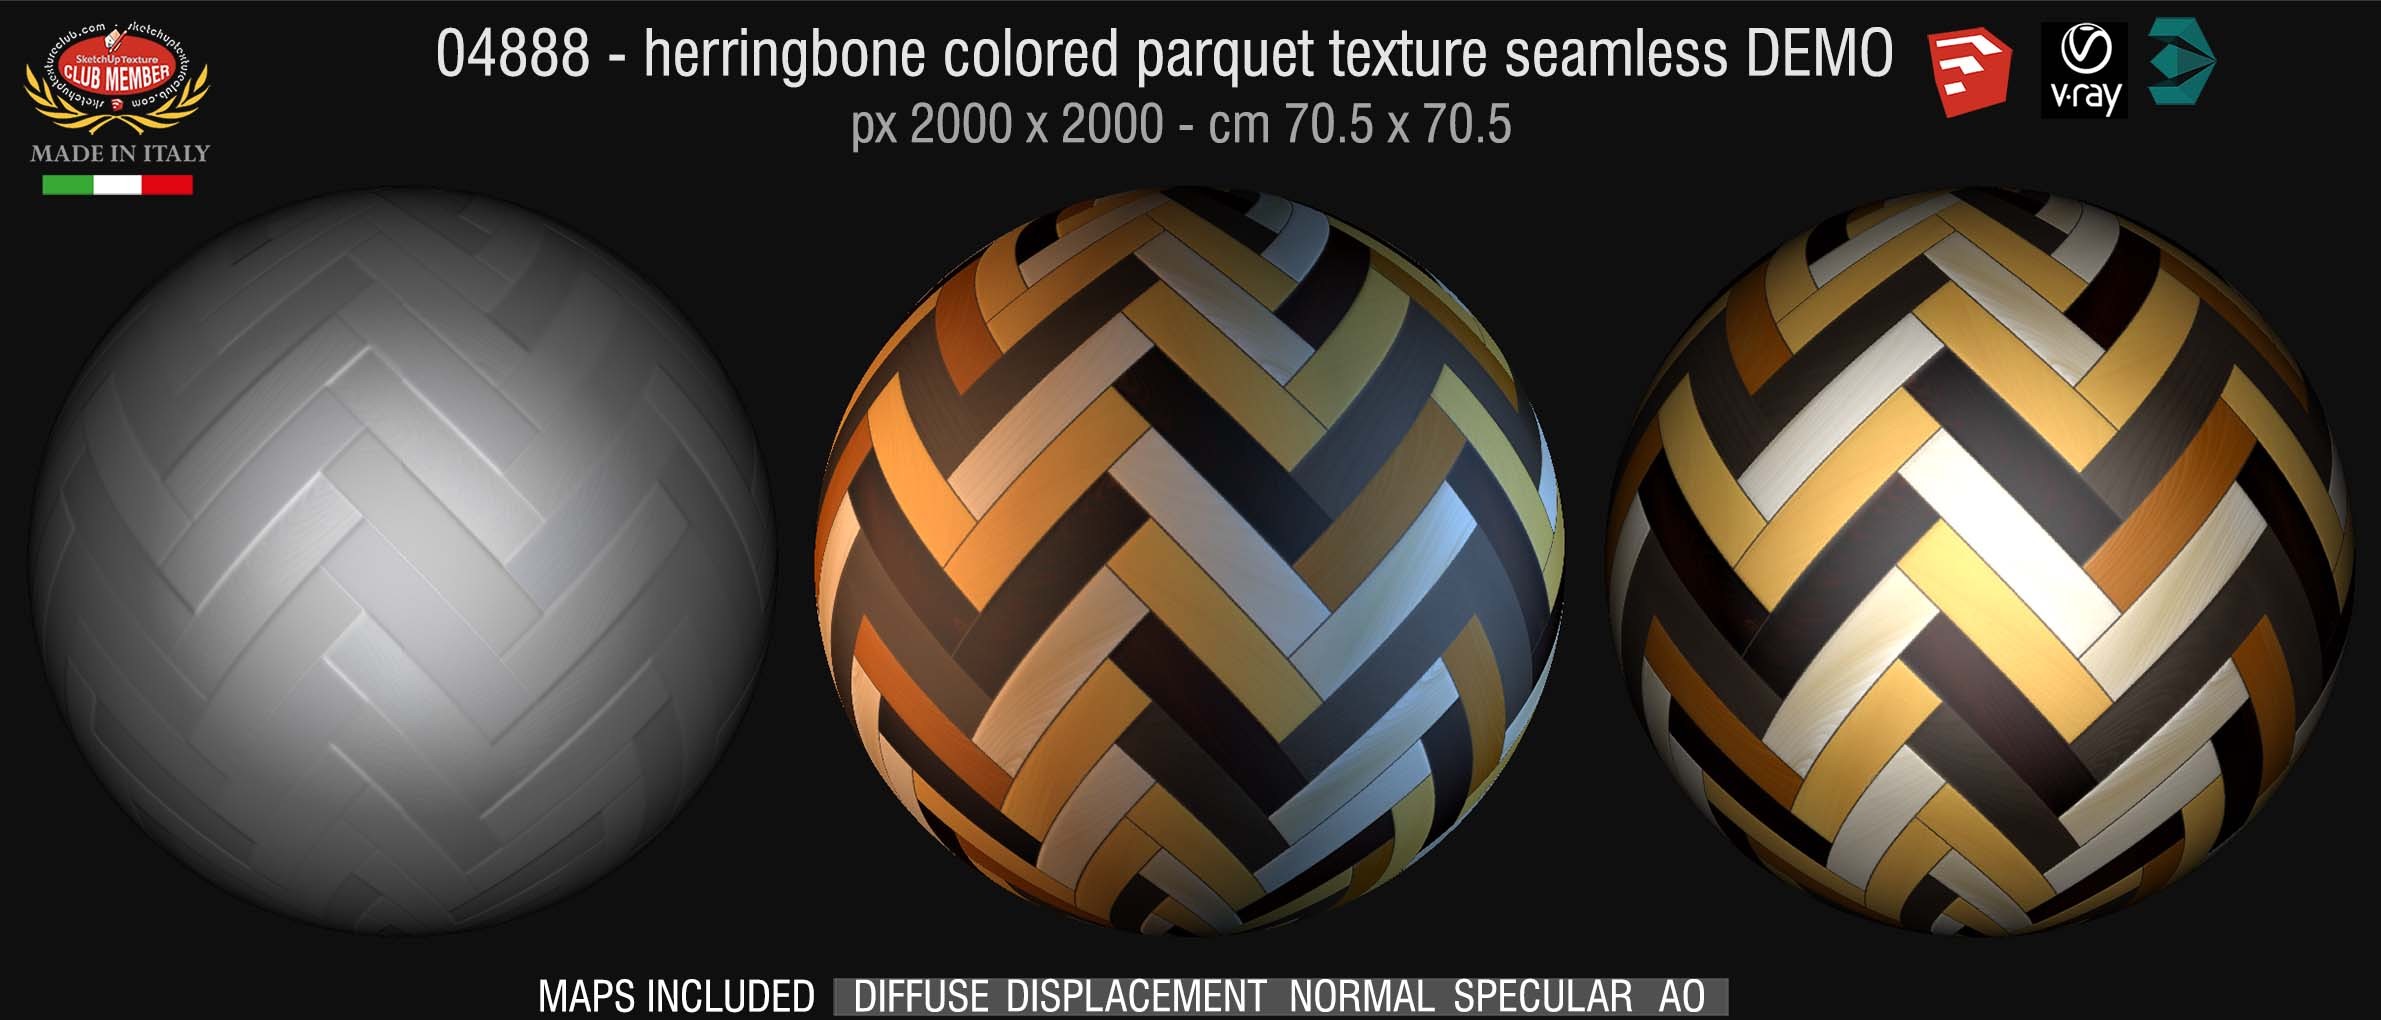 04888 HR Herringbone colored parquet texture seamless + maps DEMO